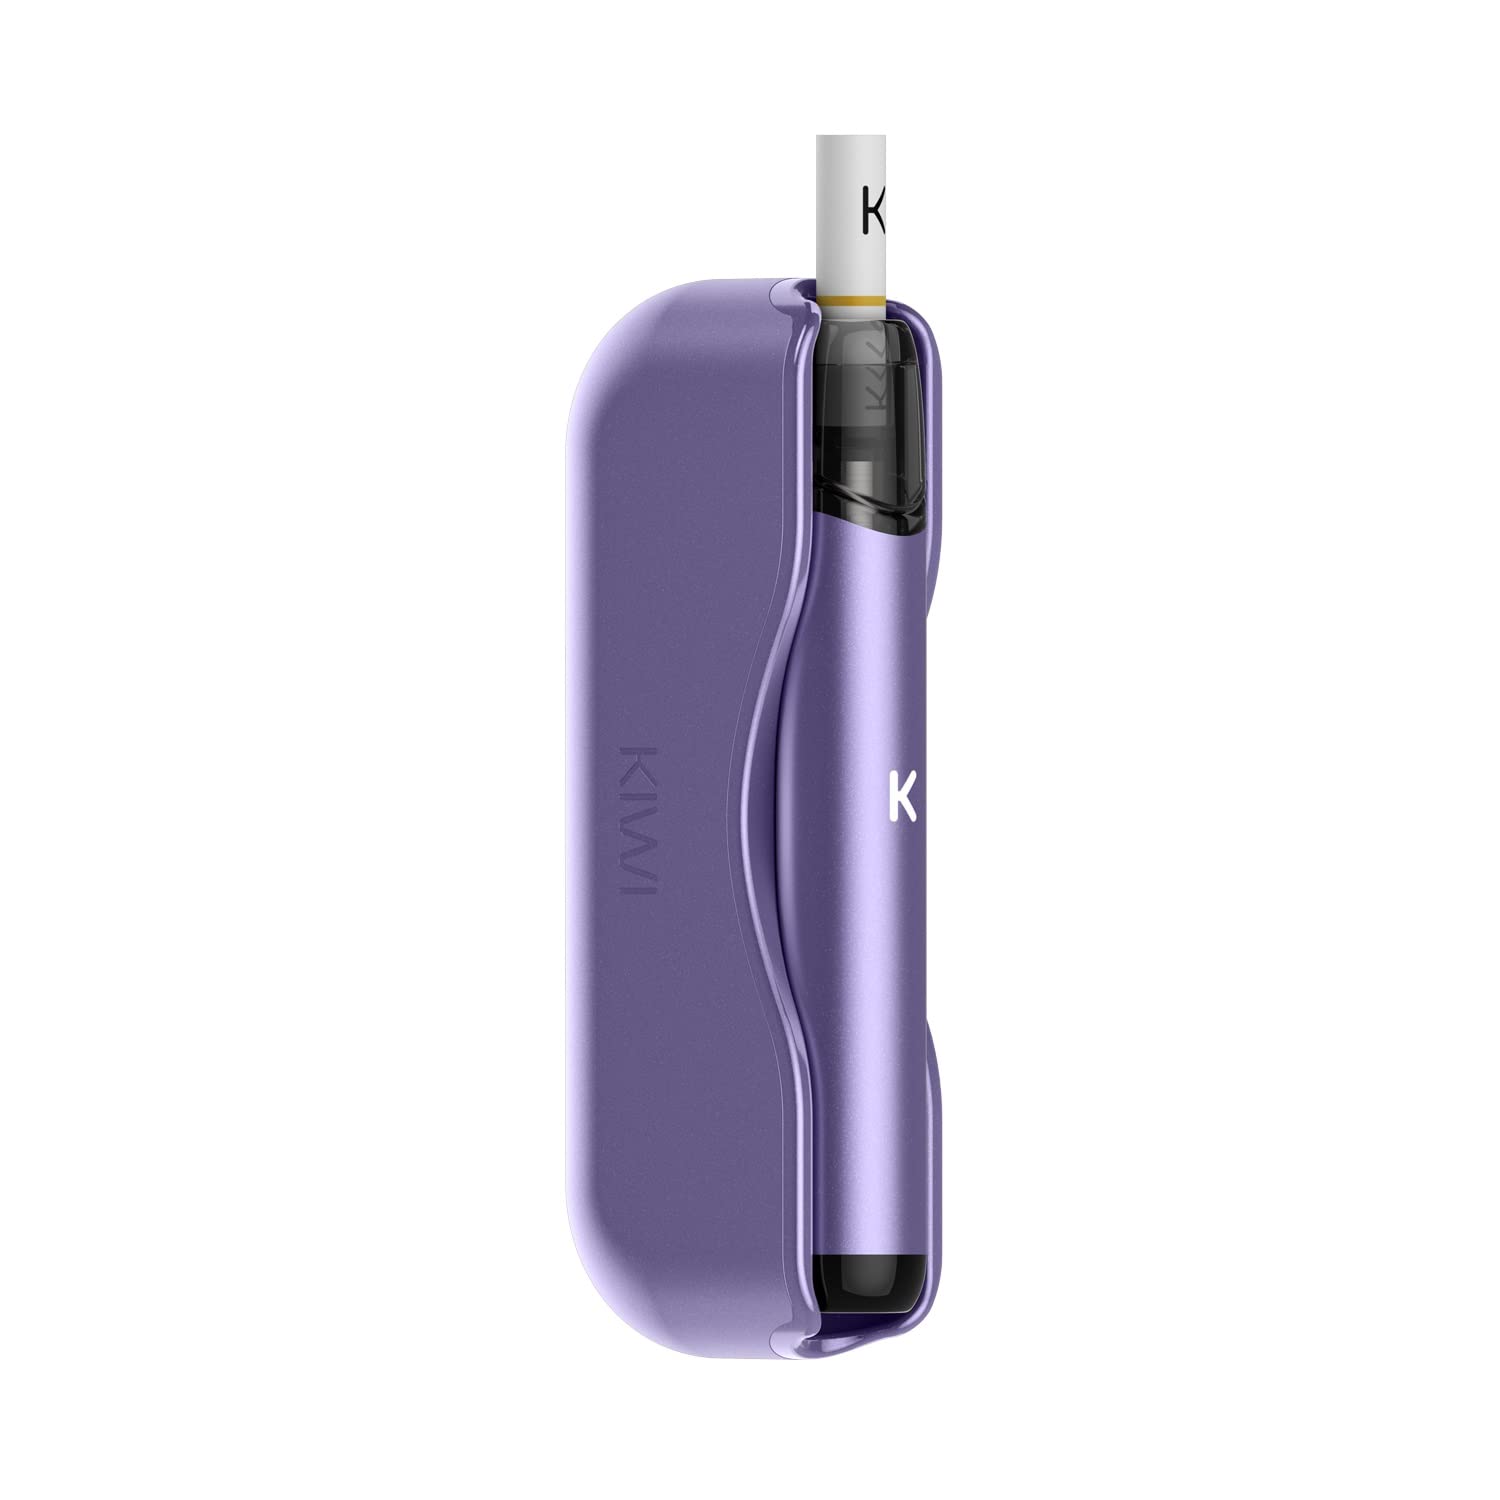 KIWI Starter Kit, Elektronische Zigarette mit Pod System, 400mAh, Powerbank 1450 mAh, 1,8 ml, Farbe Space Violet, kein Nikotin, kein E-Liquid